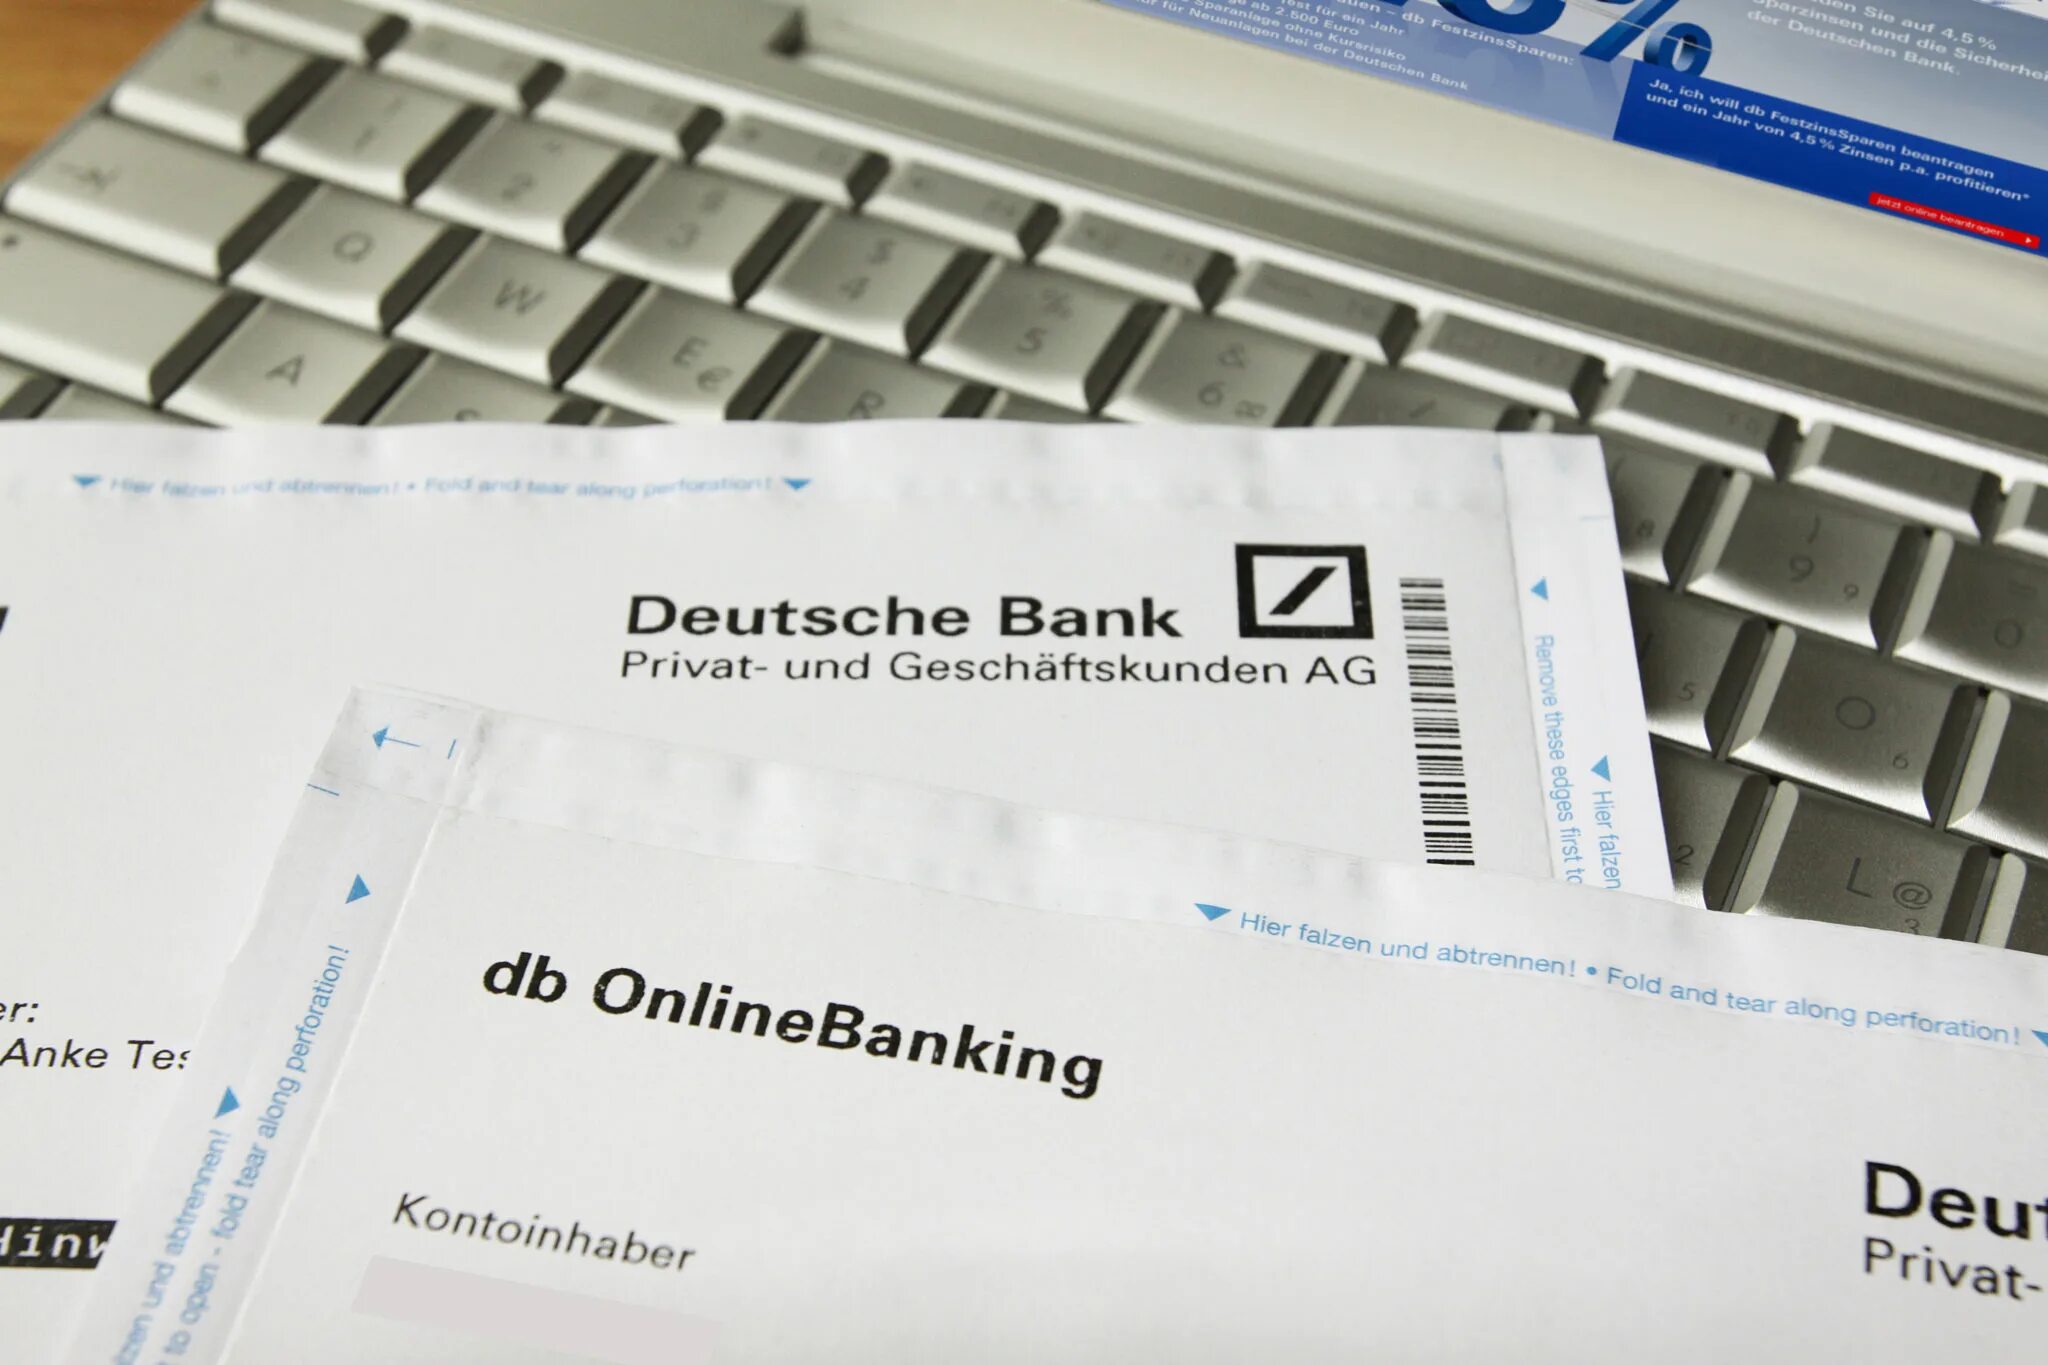 Печать Deutsche Bank. Deutsche Bank mobile. Statement банка Дойче банк. Der bank